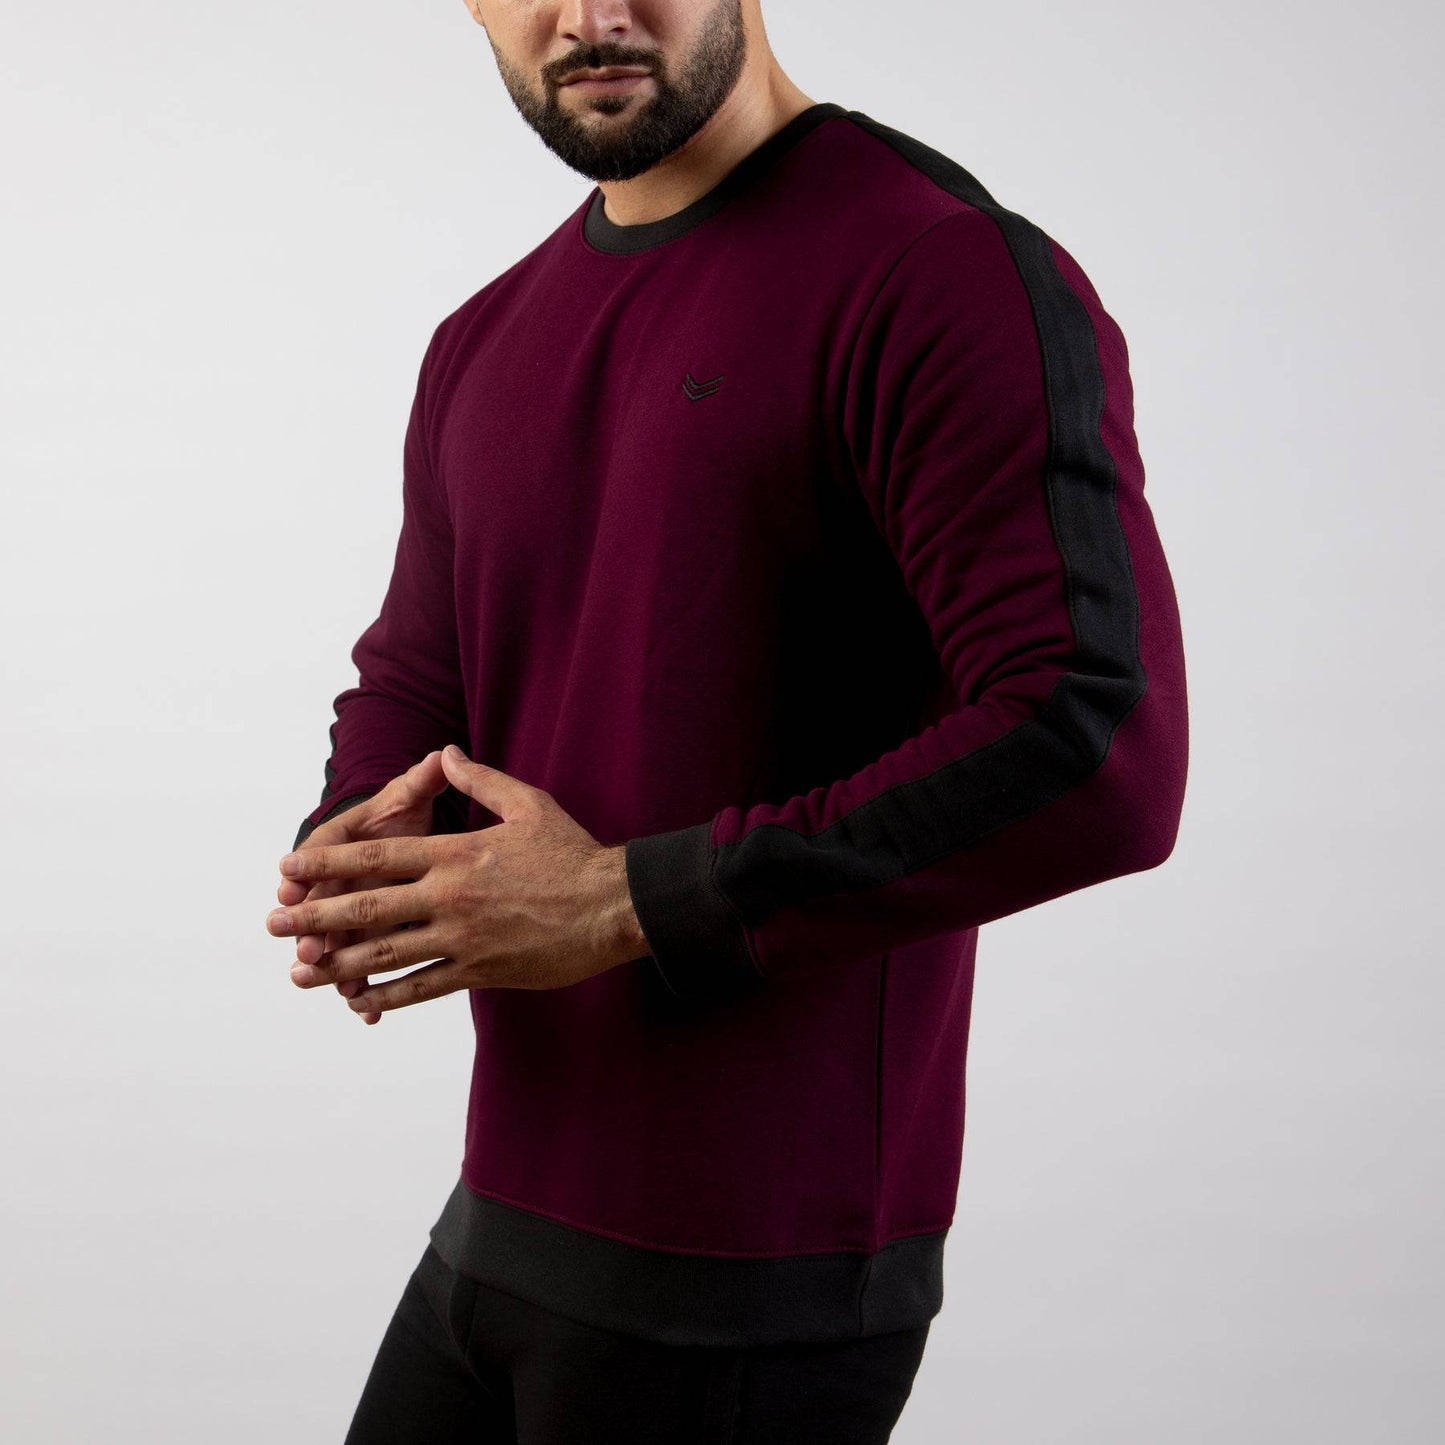 Wine Fleece Sweatshirt With Black Panels - Valetica Sports